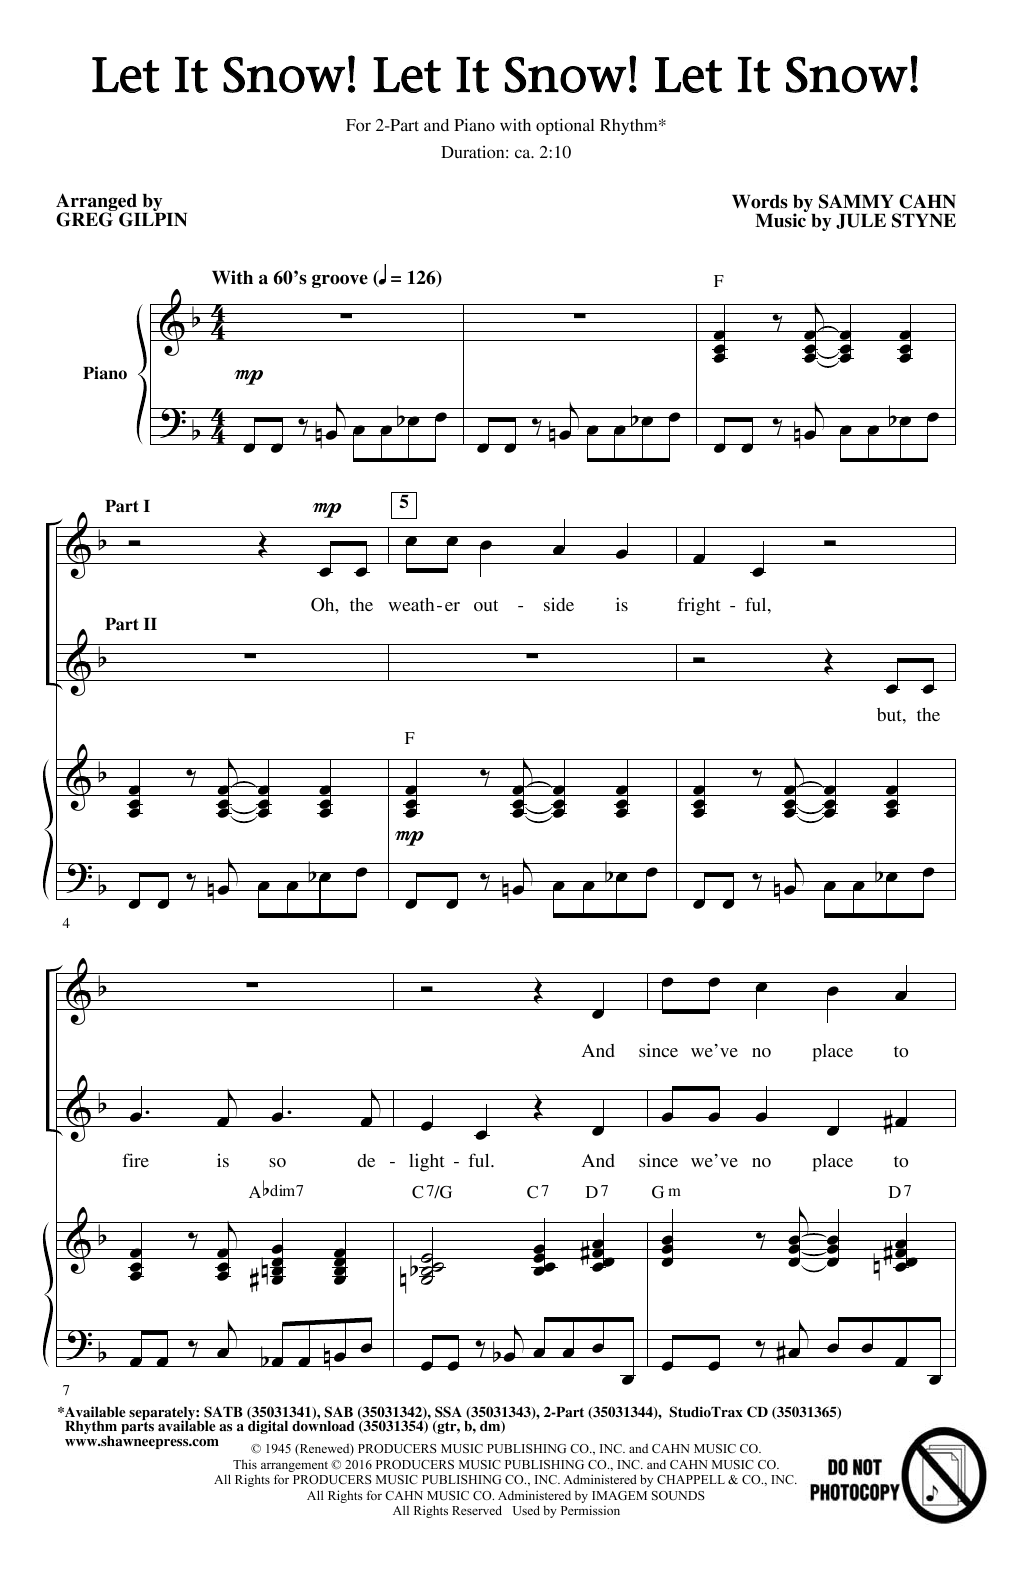 Jule Styne Let It Snow! Let It Snow! Let It Snow! (arr. Greg Gilpin) Sheet Music Notes & Chords for 2-Part Choir - Download or Print PDF